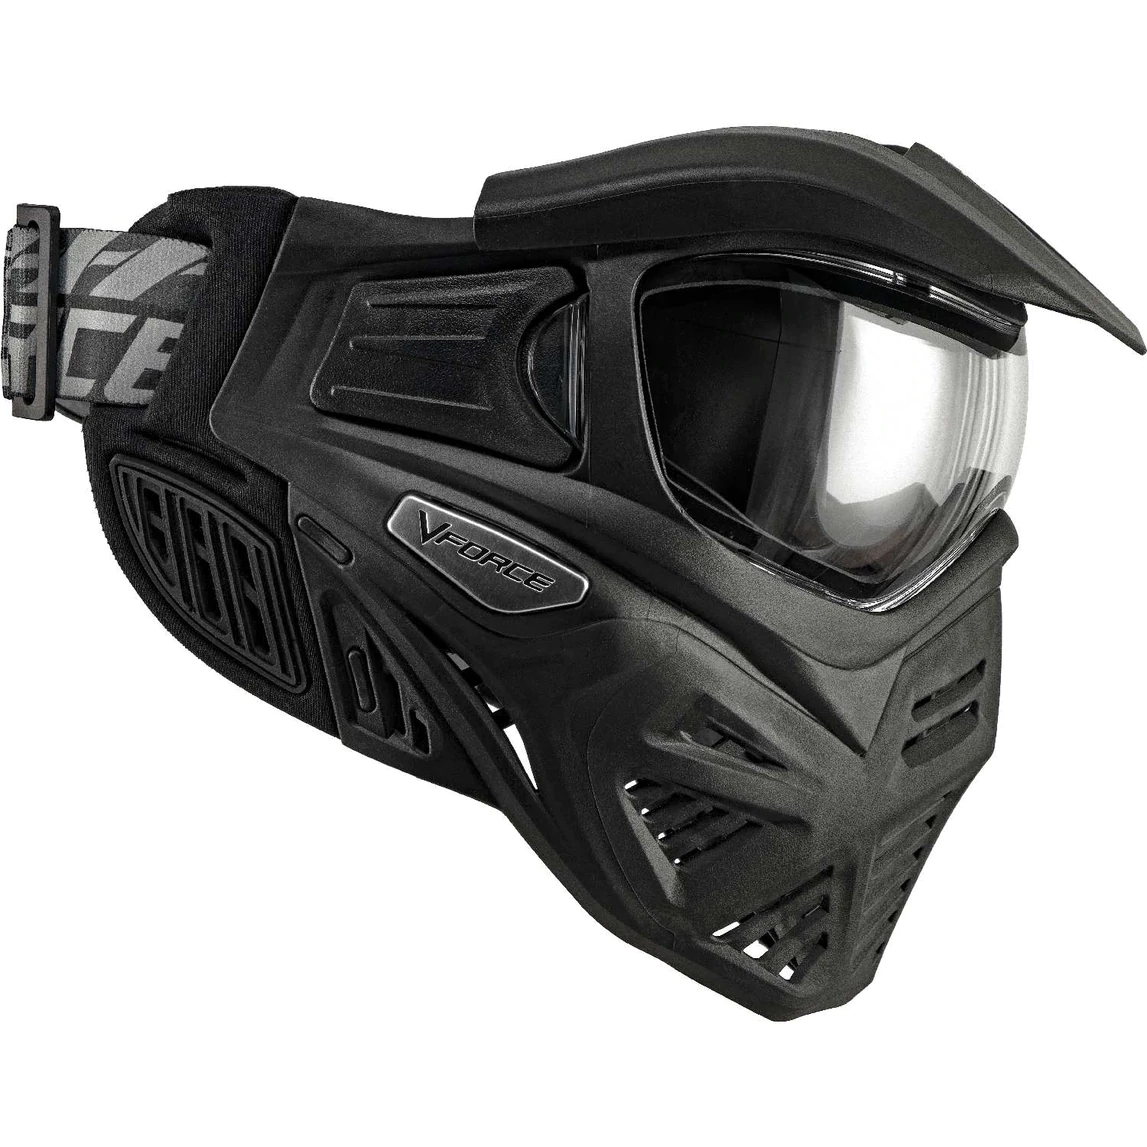 V-Force Grill Dynamic Sports Gear SSF Maskenschaum Kit 